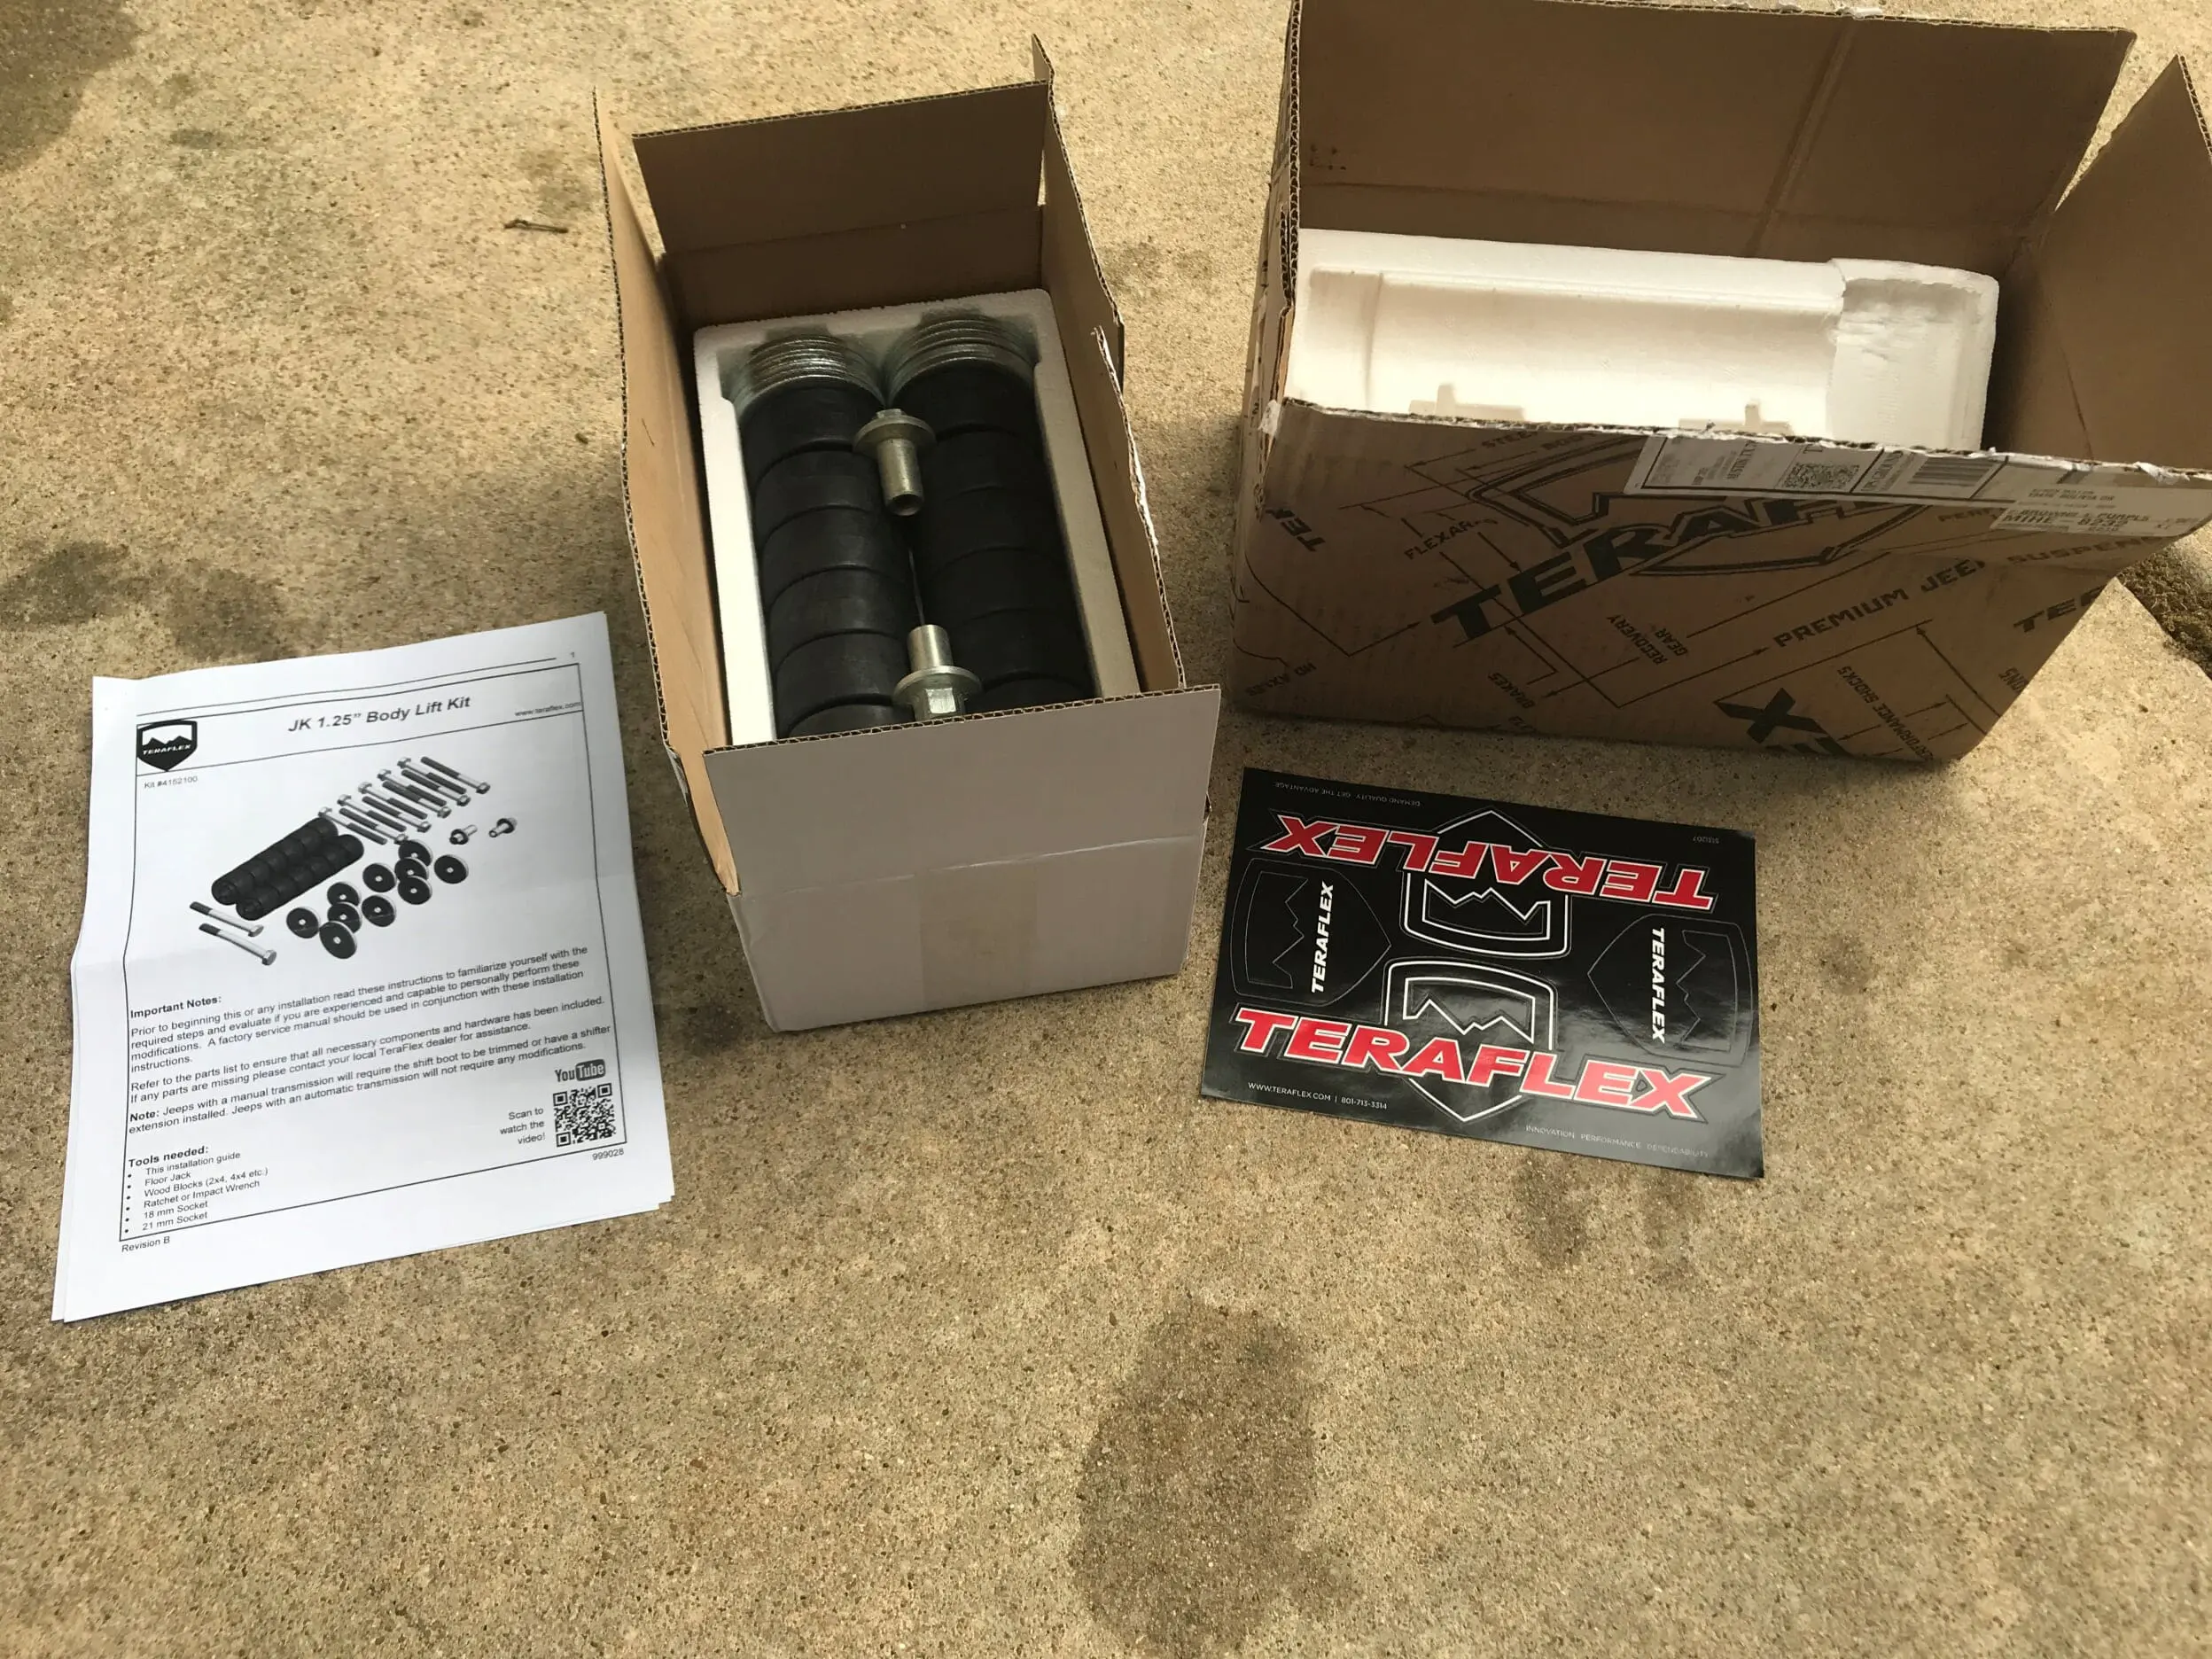 Teraflex 1.25" body lift kit unboxing with terraflex stickers